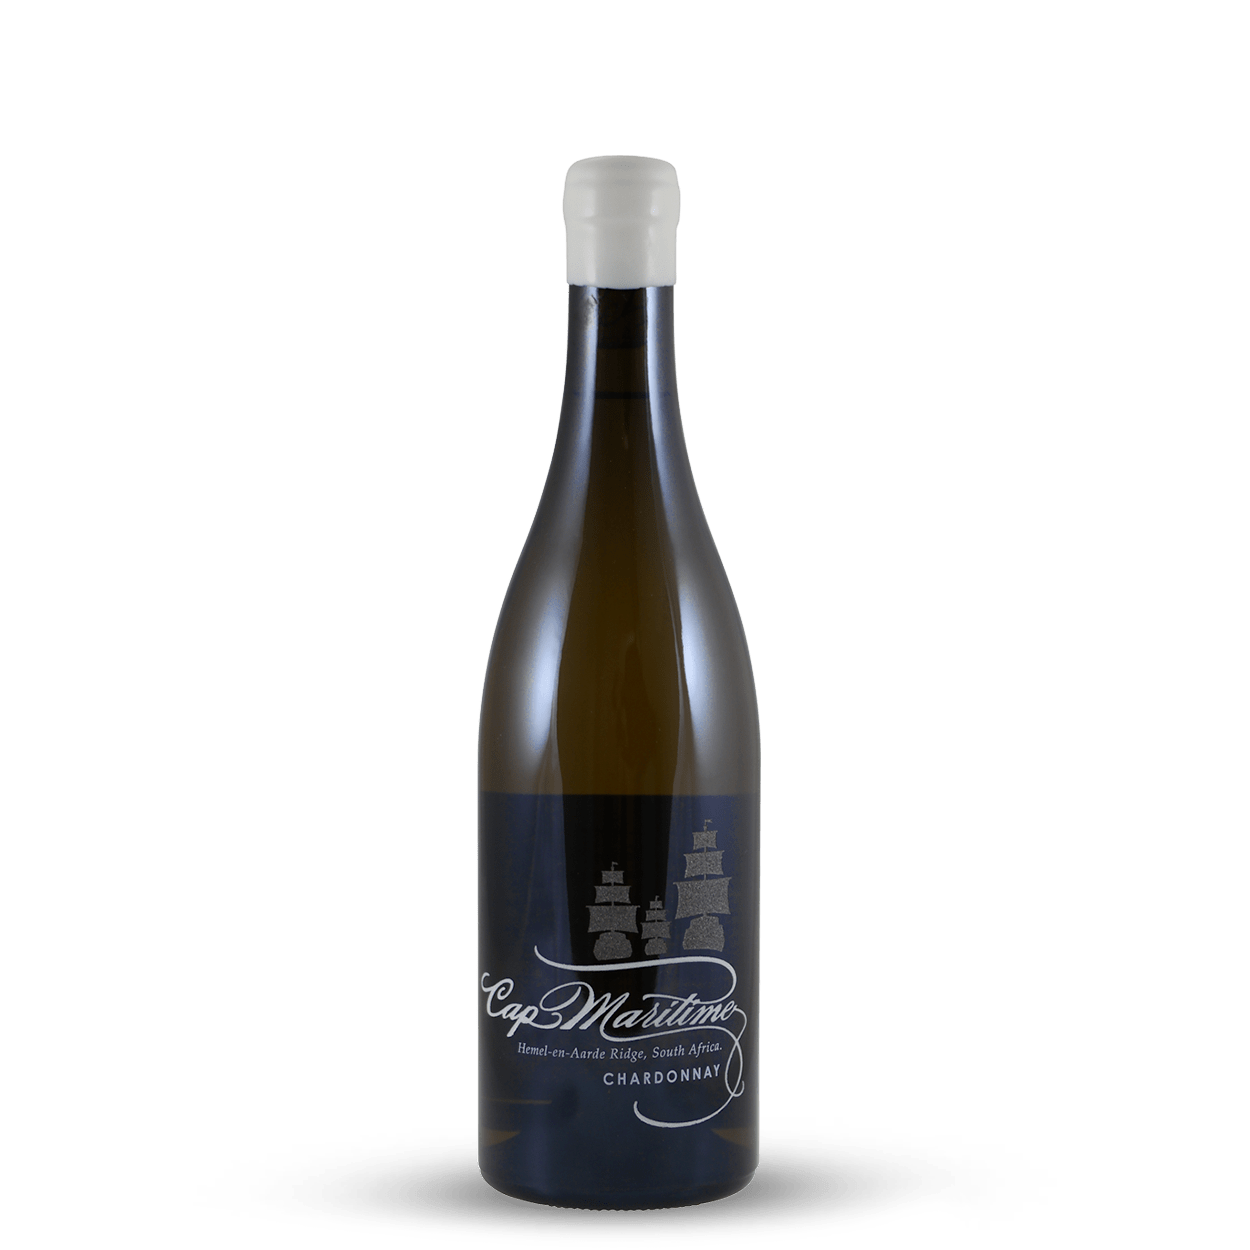 Boekenhoutskloof Cap Maritime Chardonnay 2020